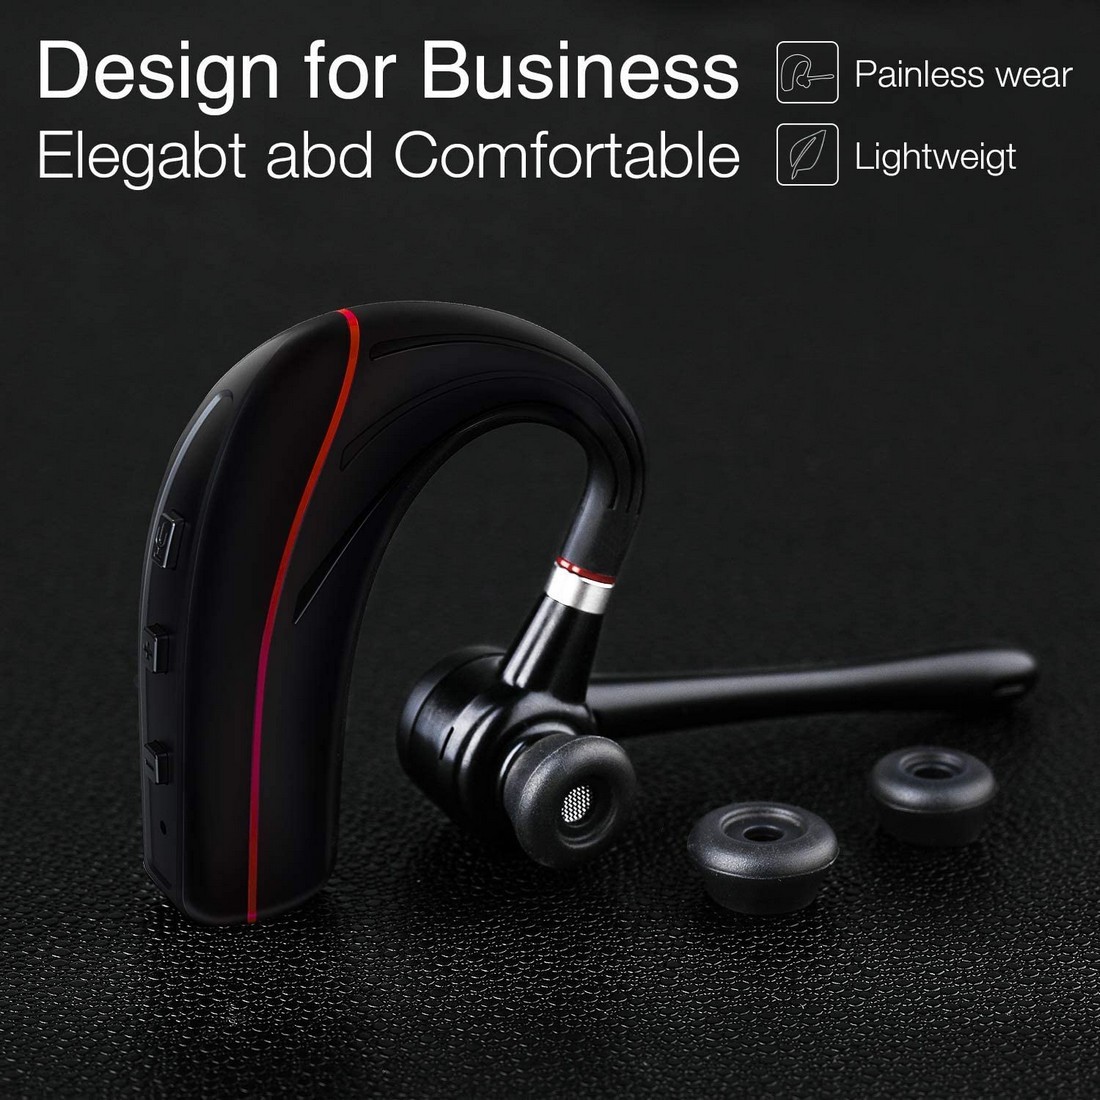 Bluetooth ヘッドセット5.0 高音質片耳 内蔵マイクBluetoothイヤホン ビジネス 快適装着 ハンズフリー通話 また日本技適マーク取得品_画像3